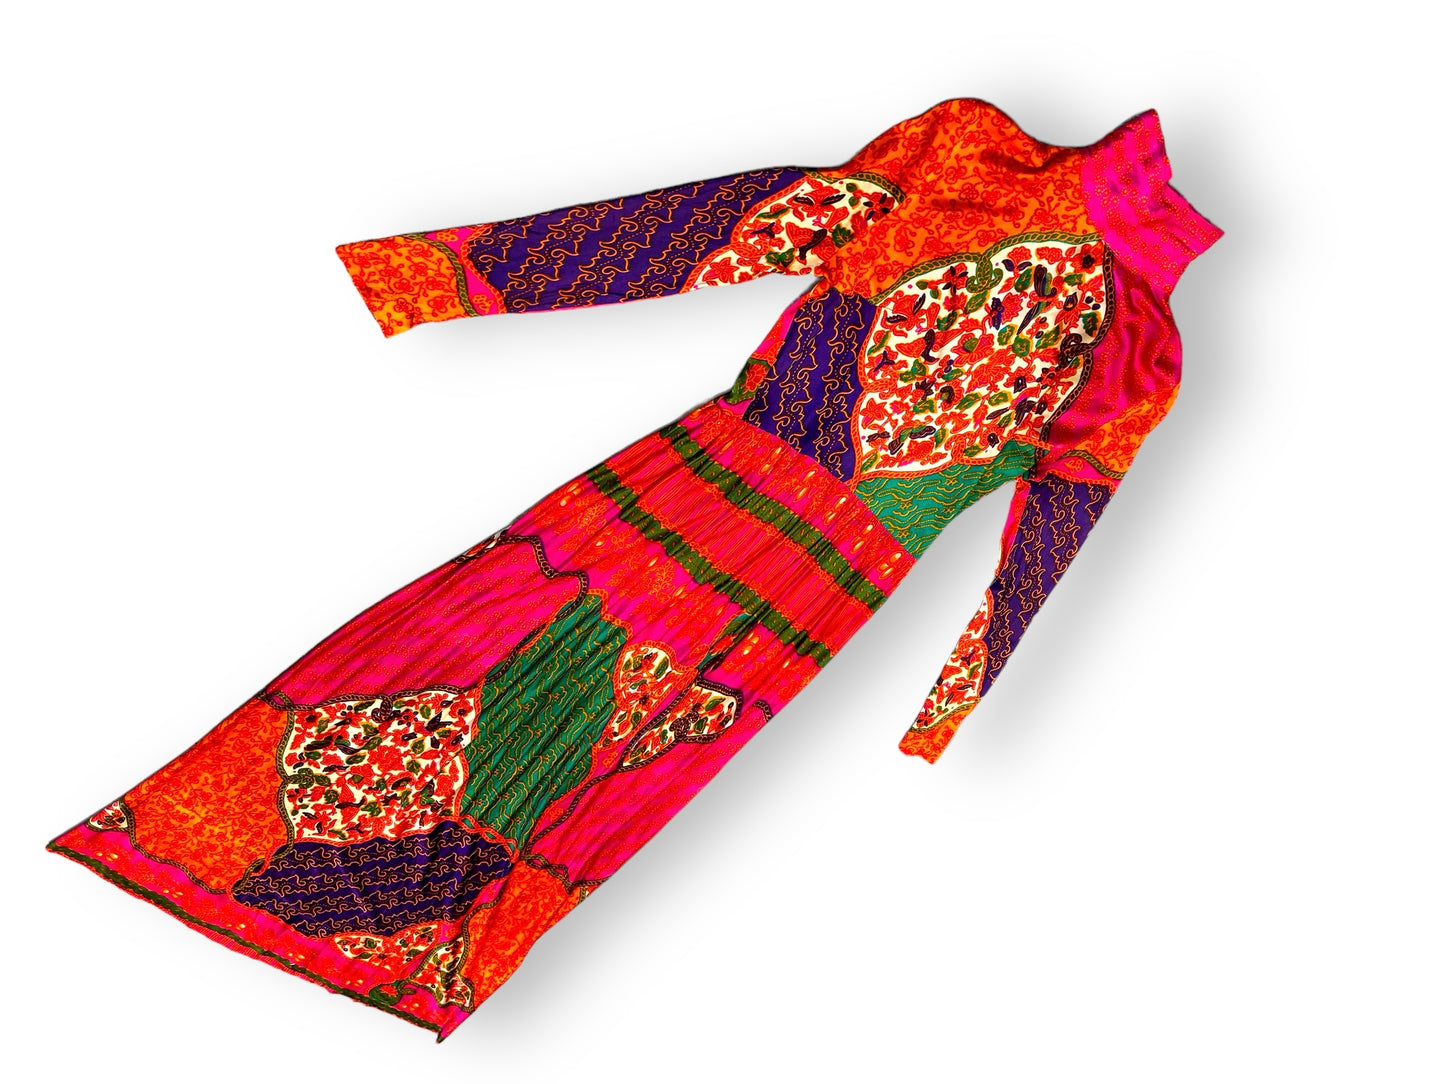 1970s “Domino” Fashion Hippie Print Dress